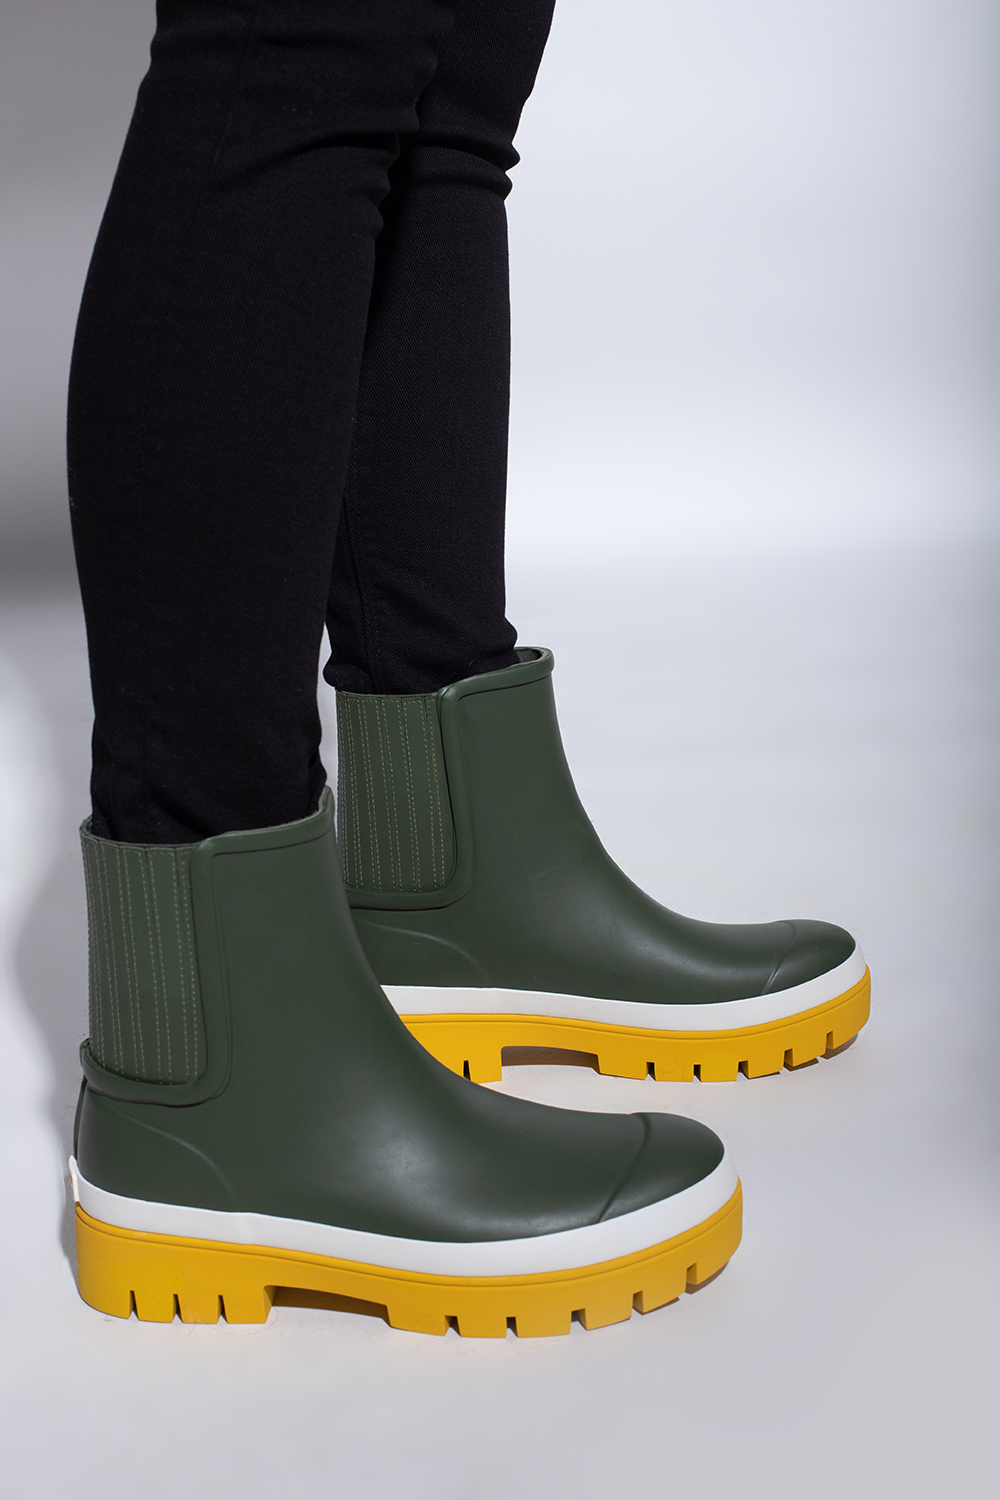 IetpShops GB - Rain boots with logo Tory Burch - Cómo montar mi Sneaker Room